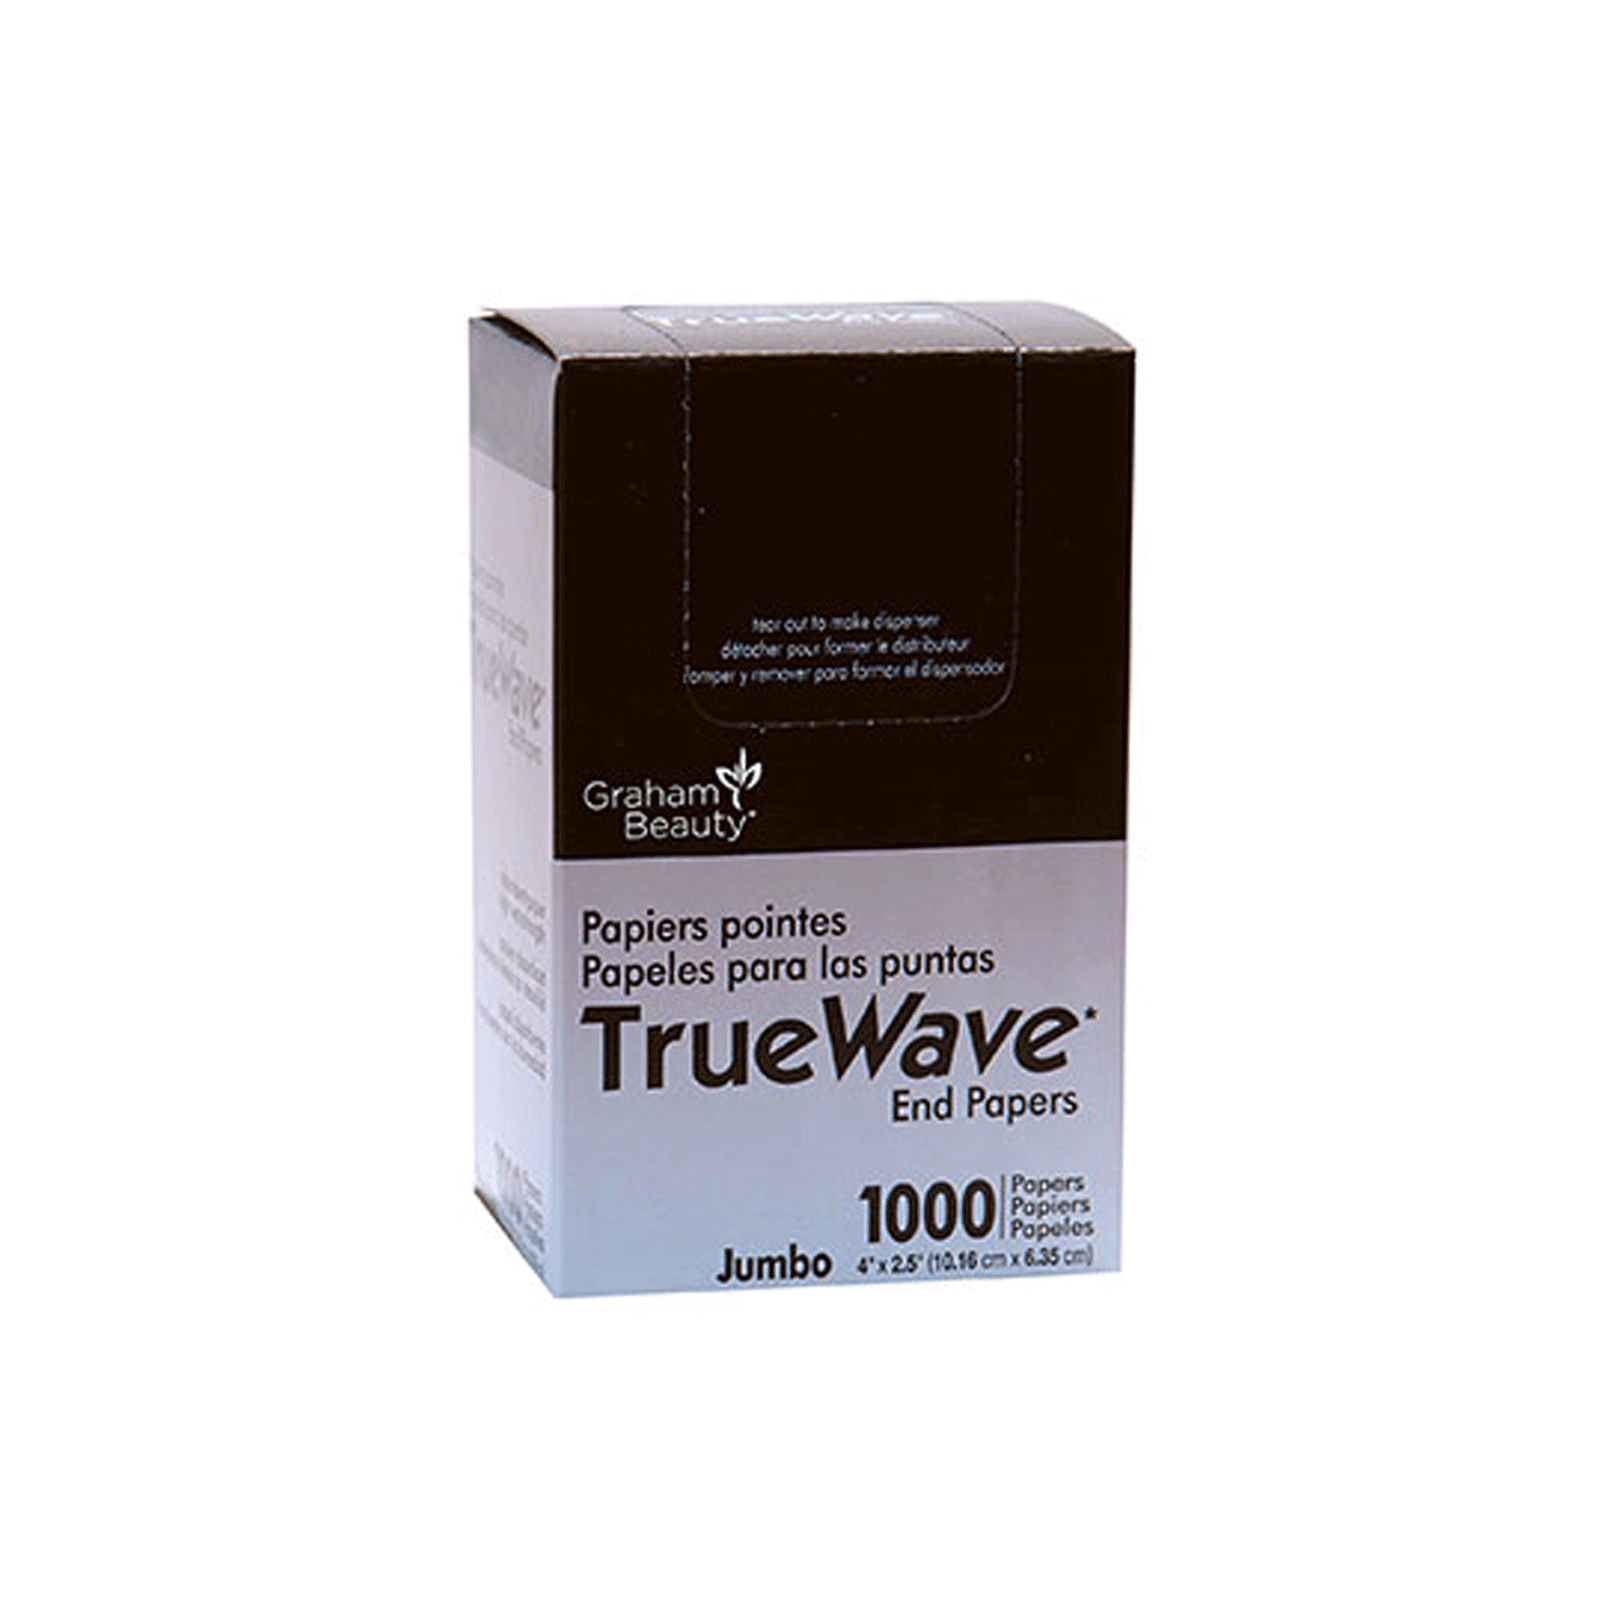 TruWave Jumbo End Wrap 1000 Sheet - Graham Professional | CosmoProf